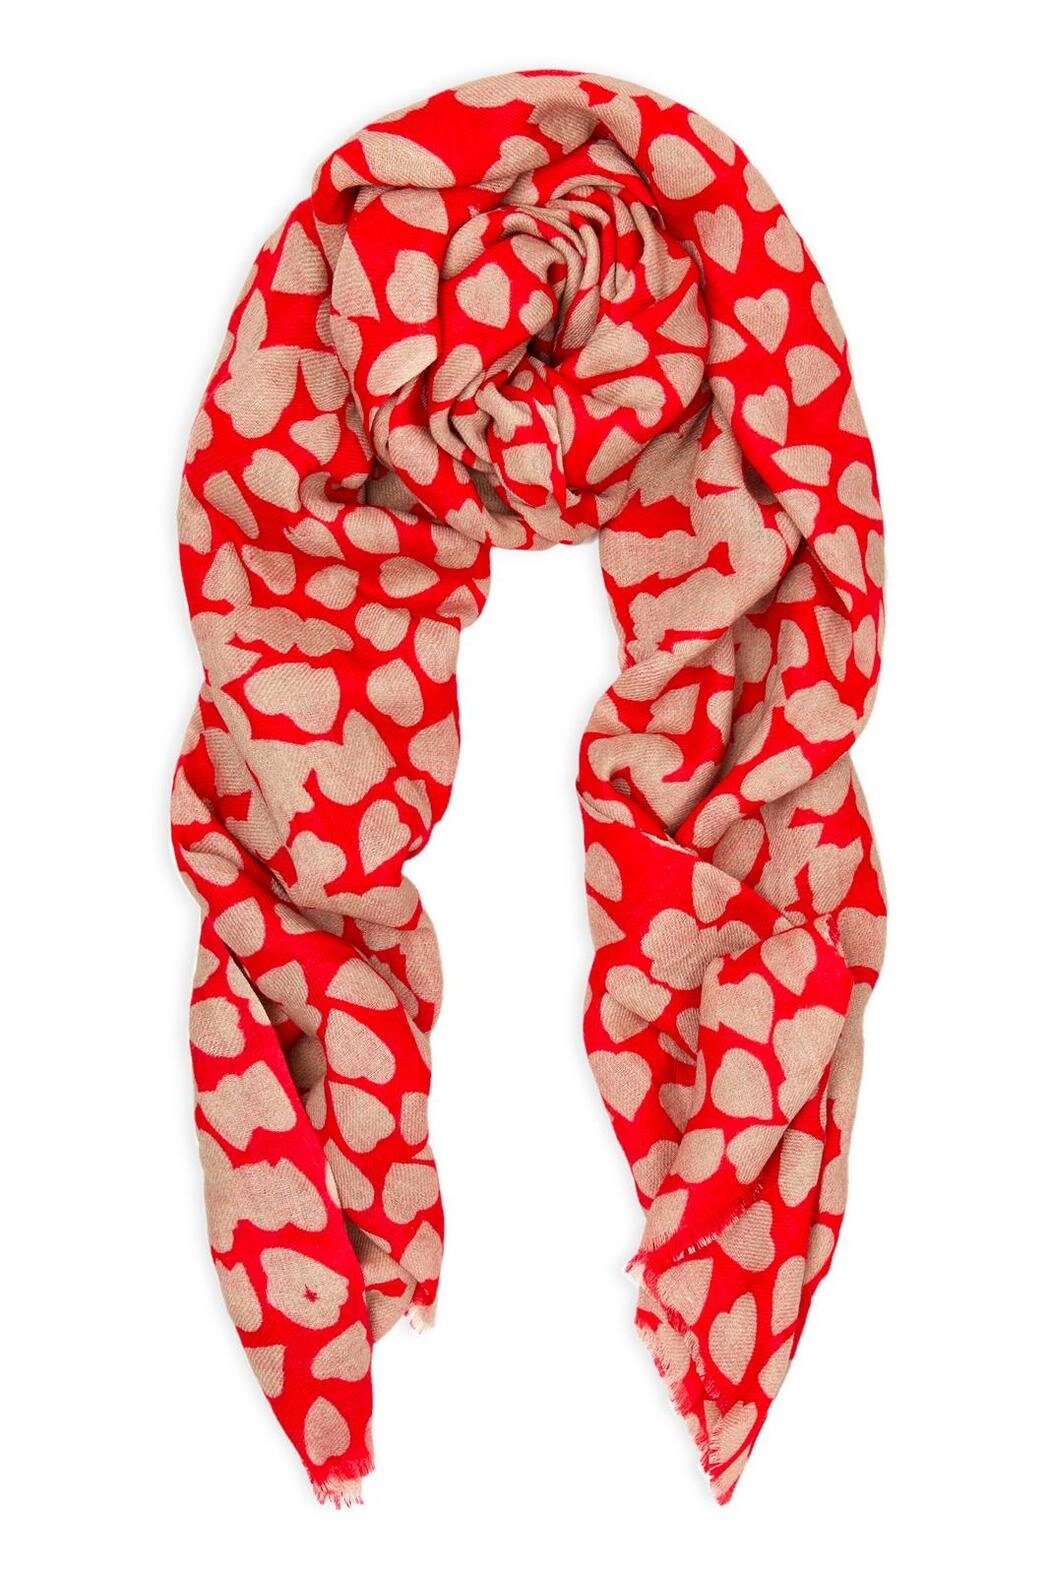 beulah-london-red-ecru-heart-shawl_orig.jpg